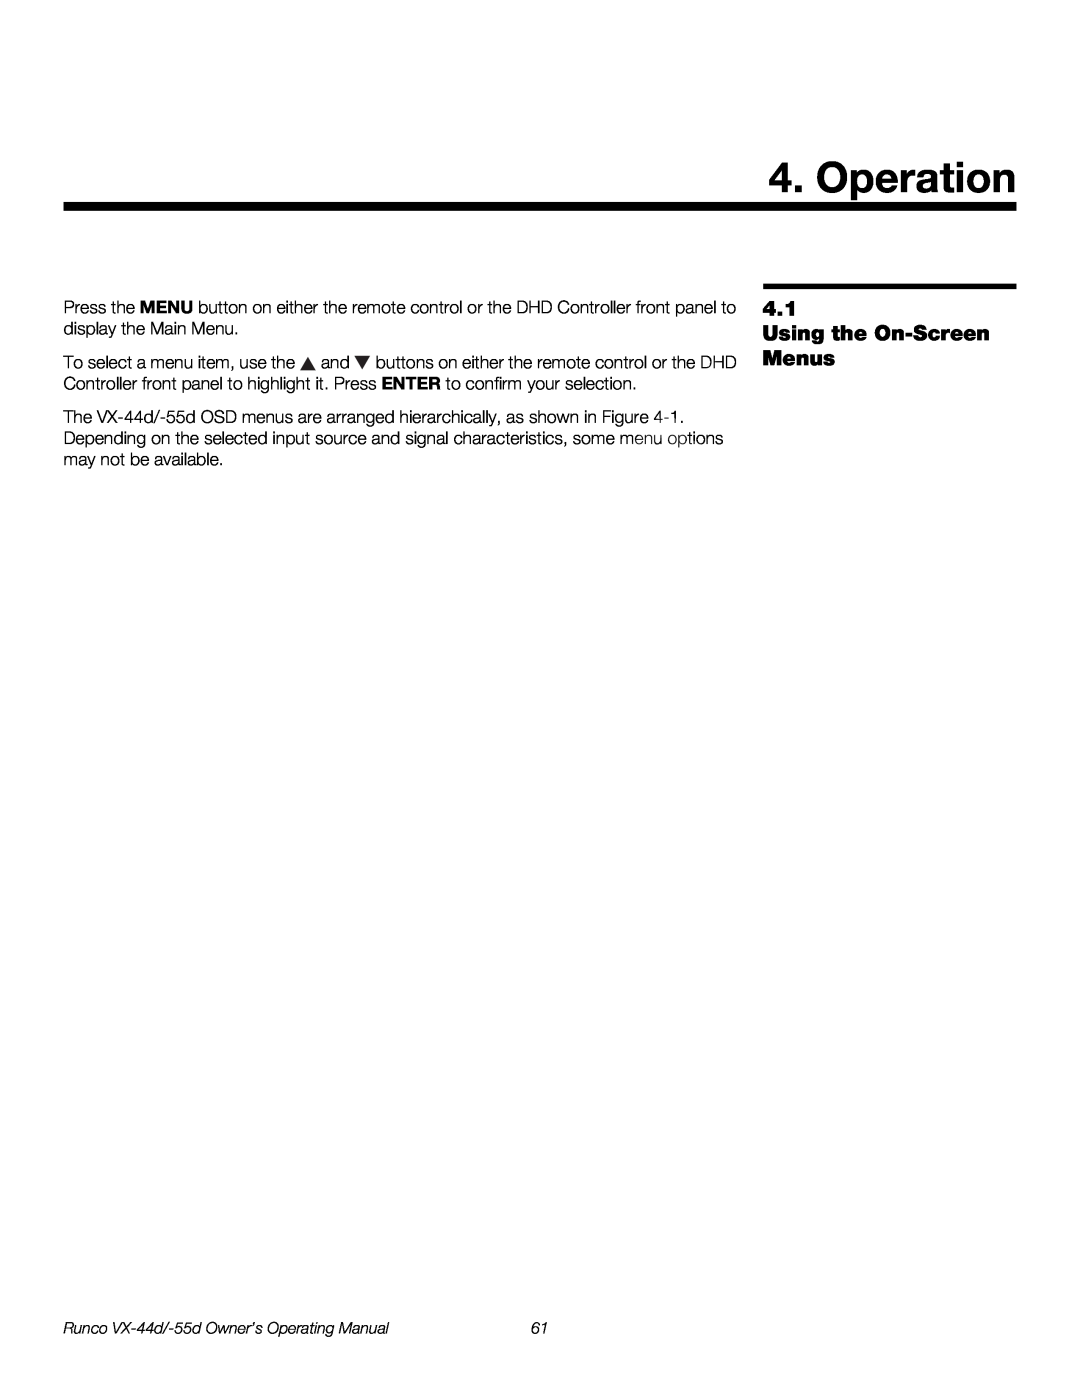 Runco VX-55D, VX-44D manual Operation, Using the On-Screen Menus 